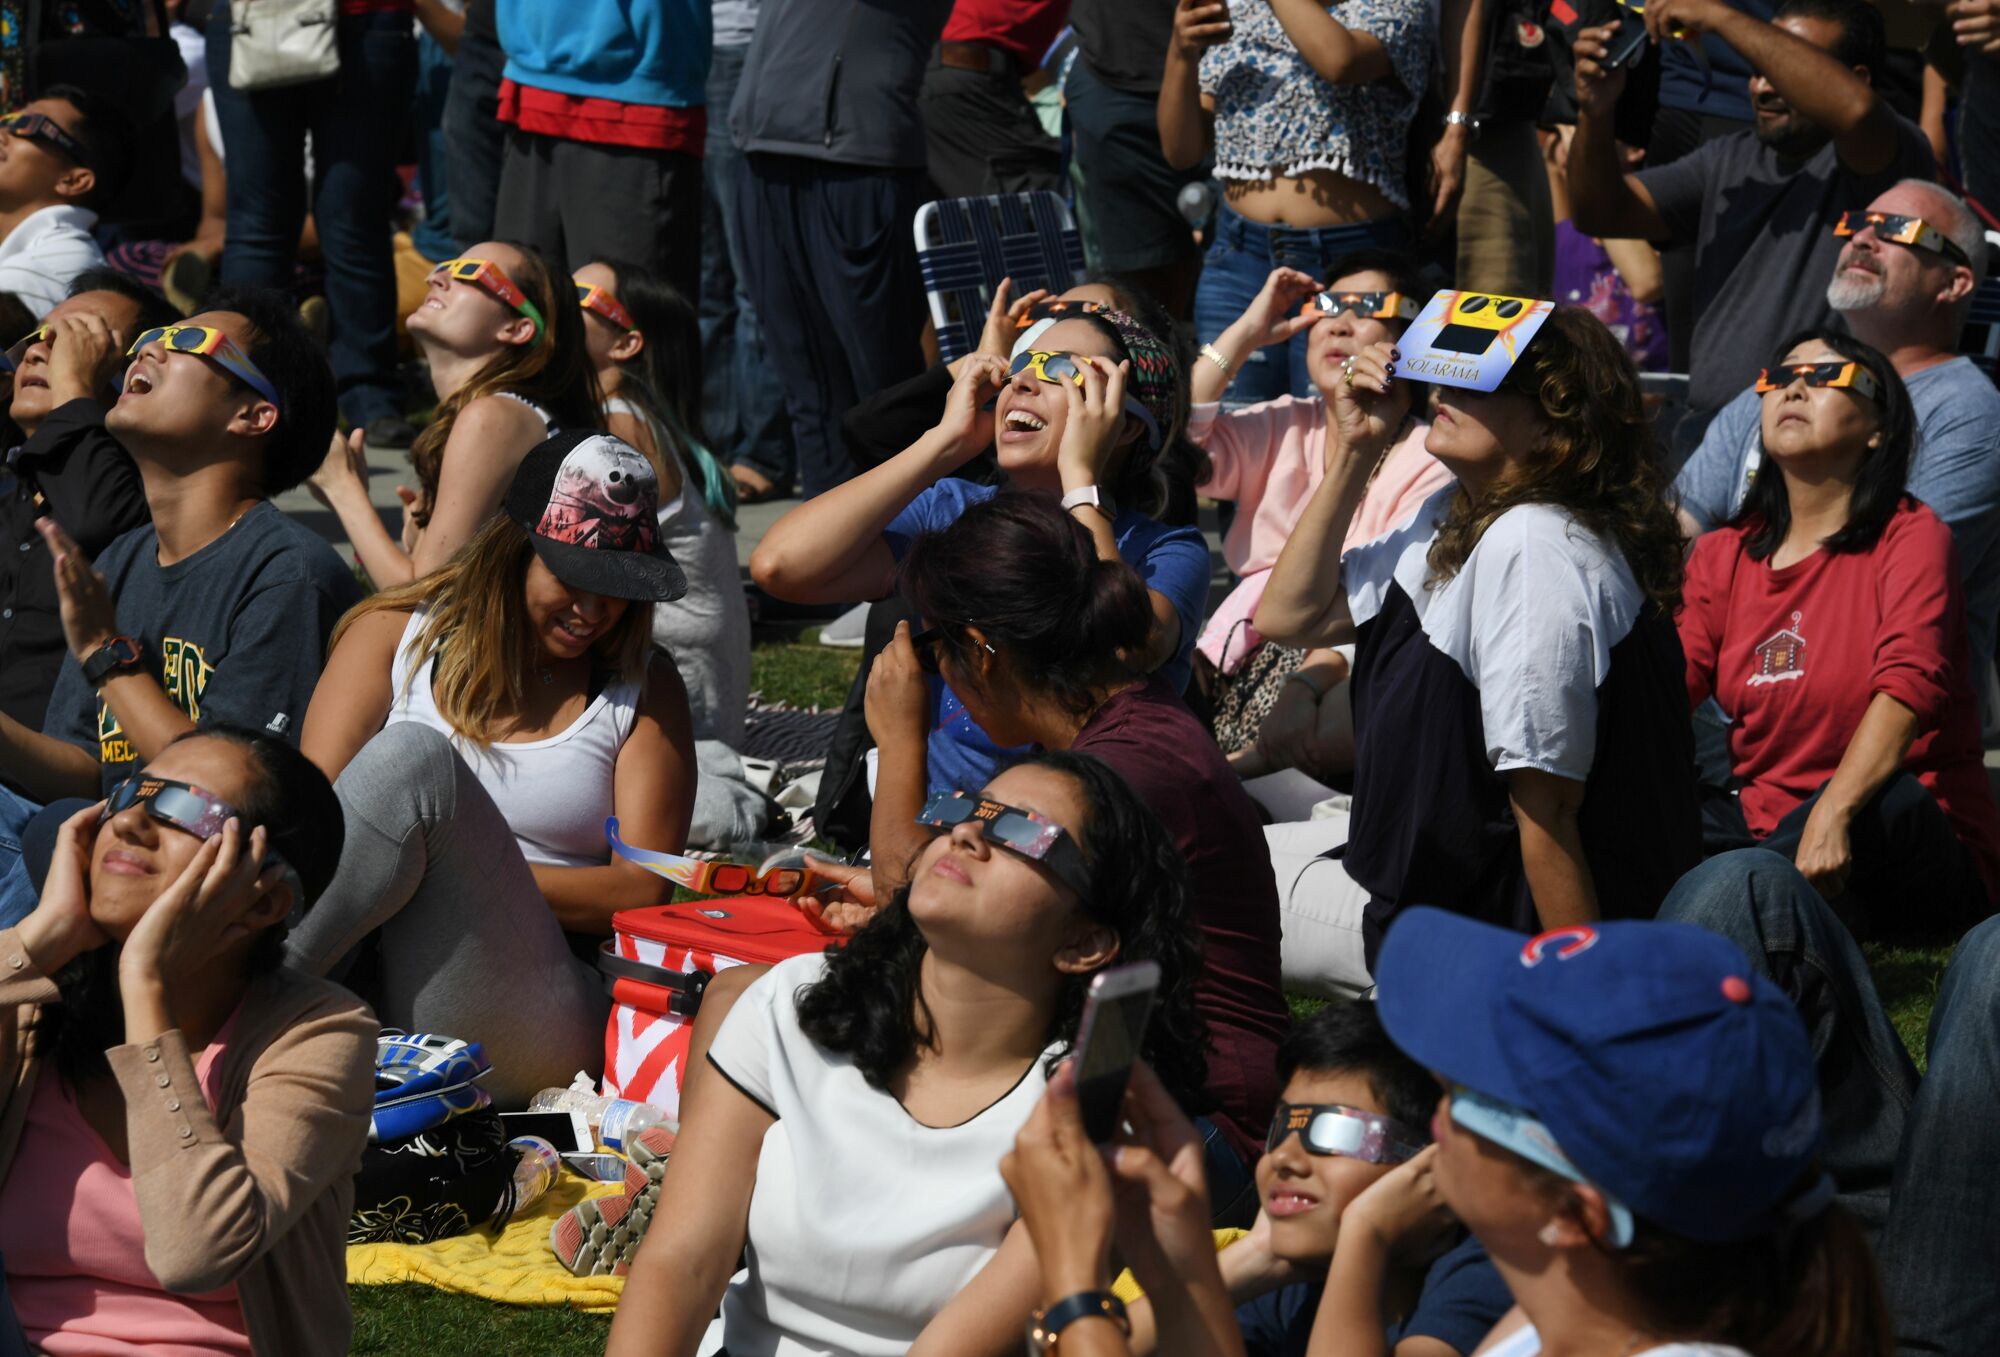 Eclipse spectators wearing solar eclipse glasses